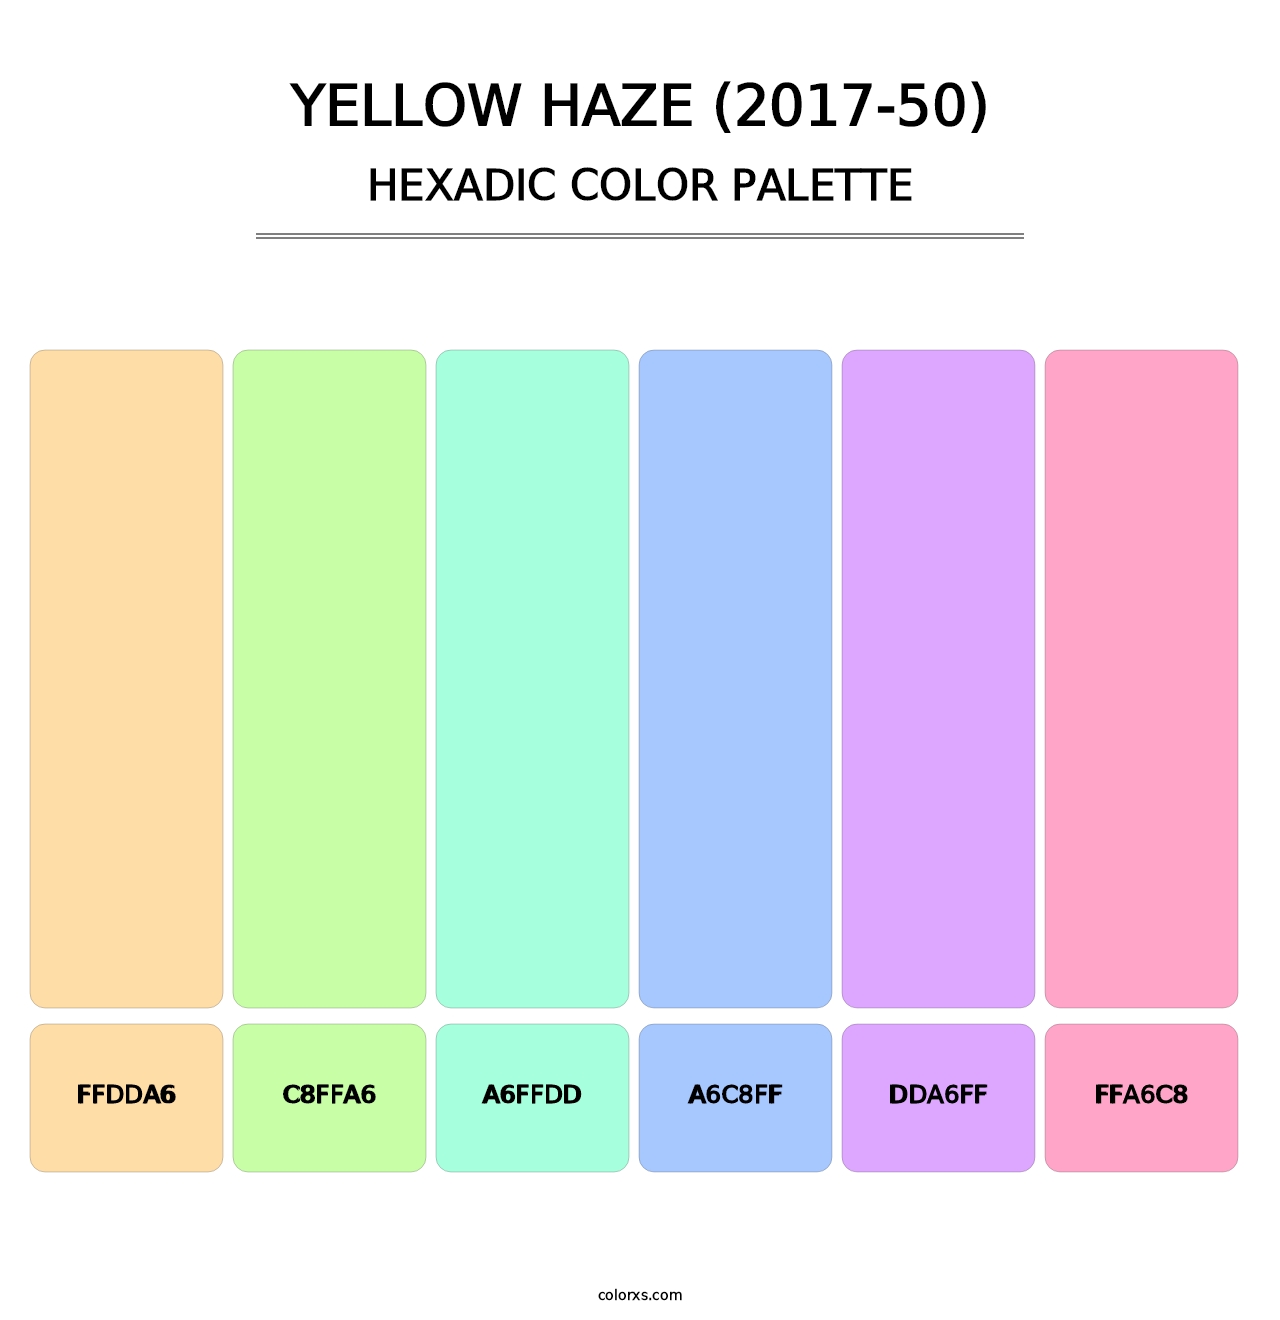 Yellow Haze (2017-50) - Hexadic Color Palette